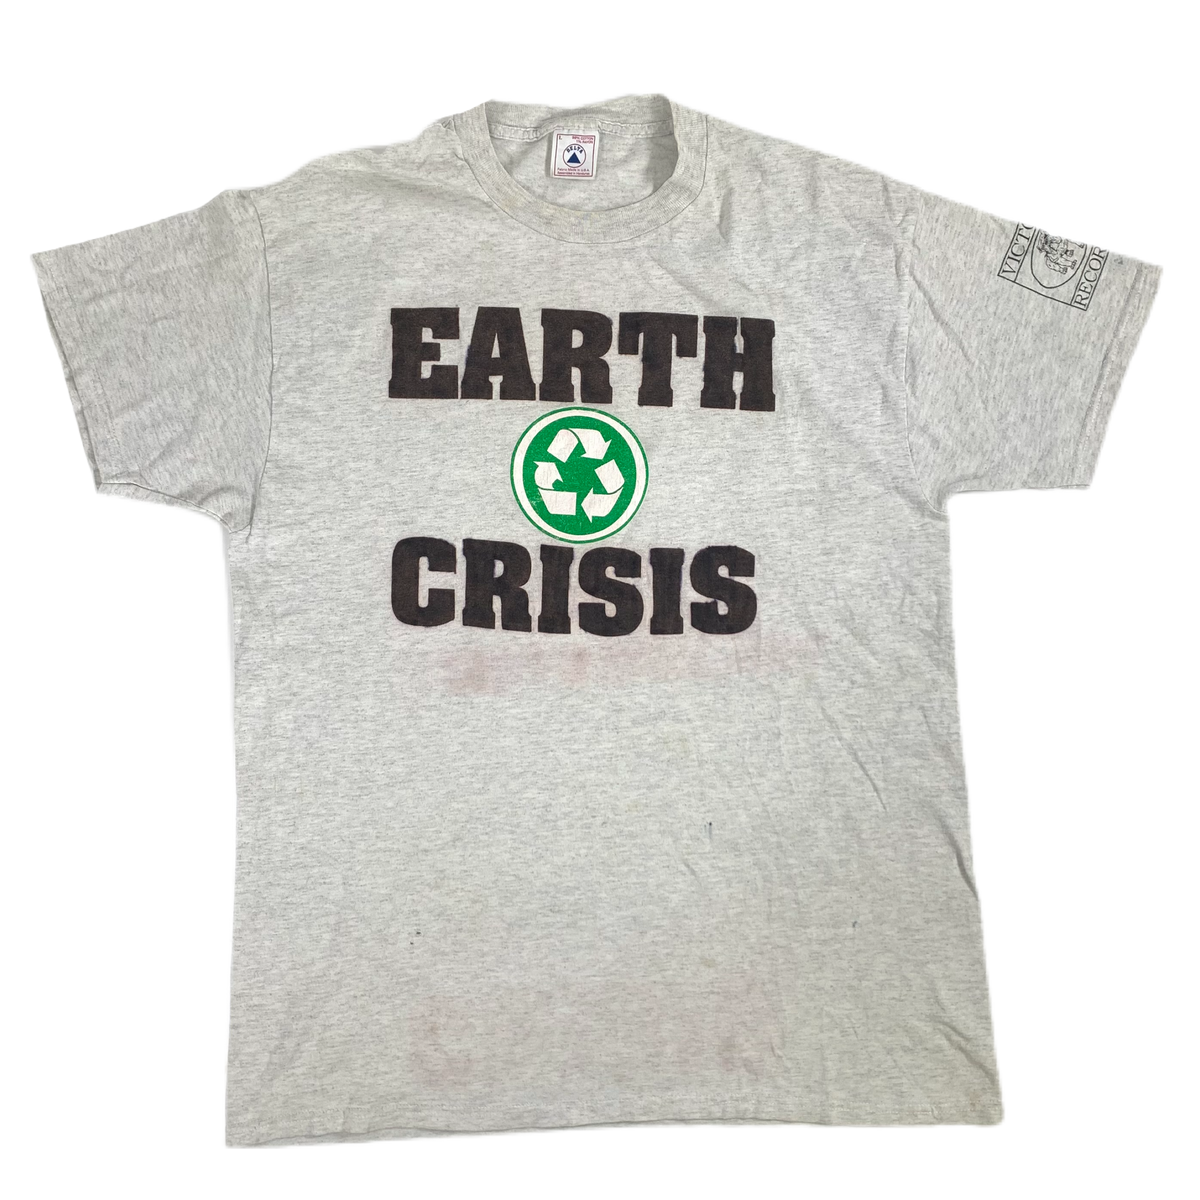 Vintage Earth Crisis &quot;The New Ethic&quot; T-Shirt